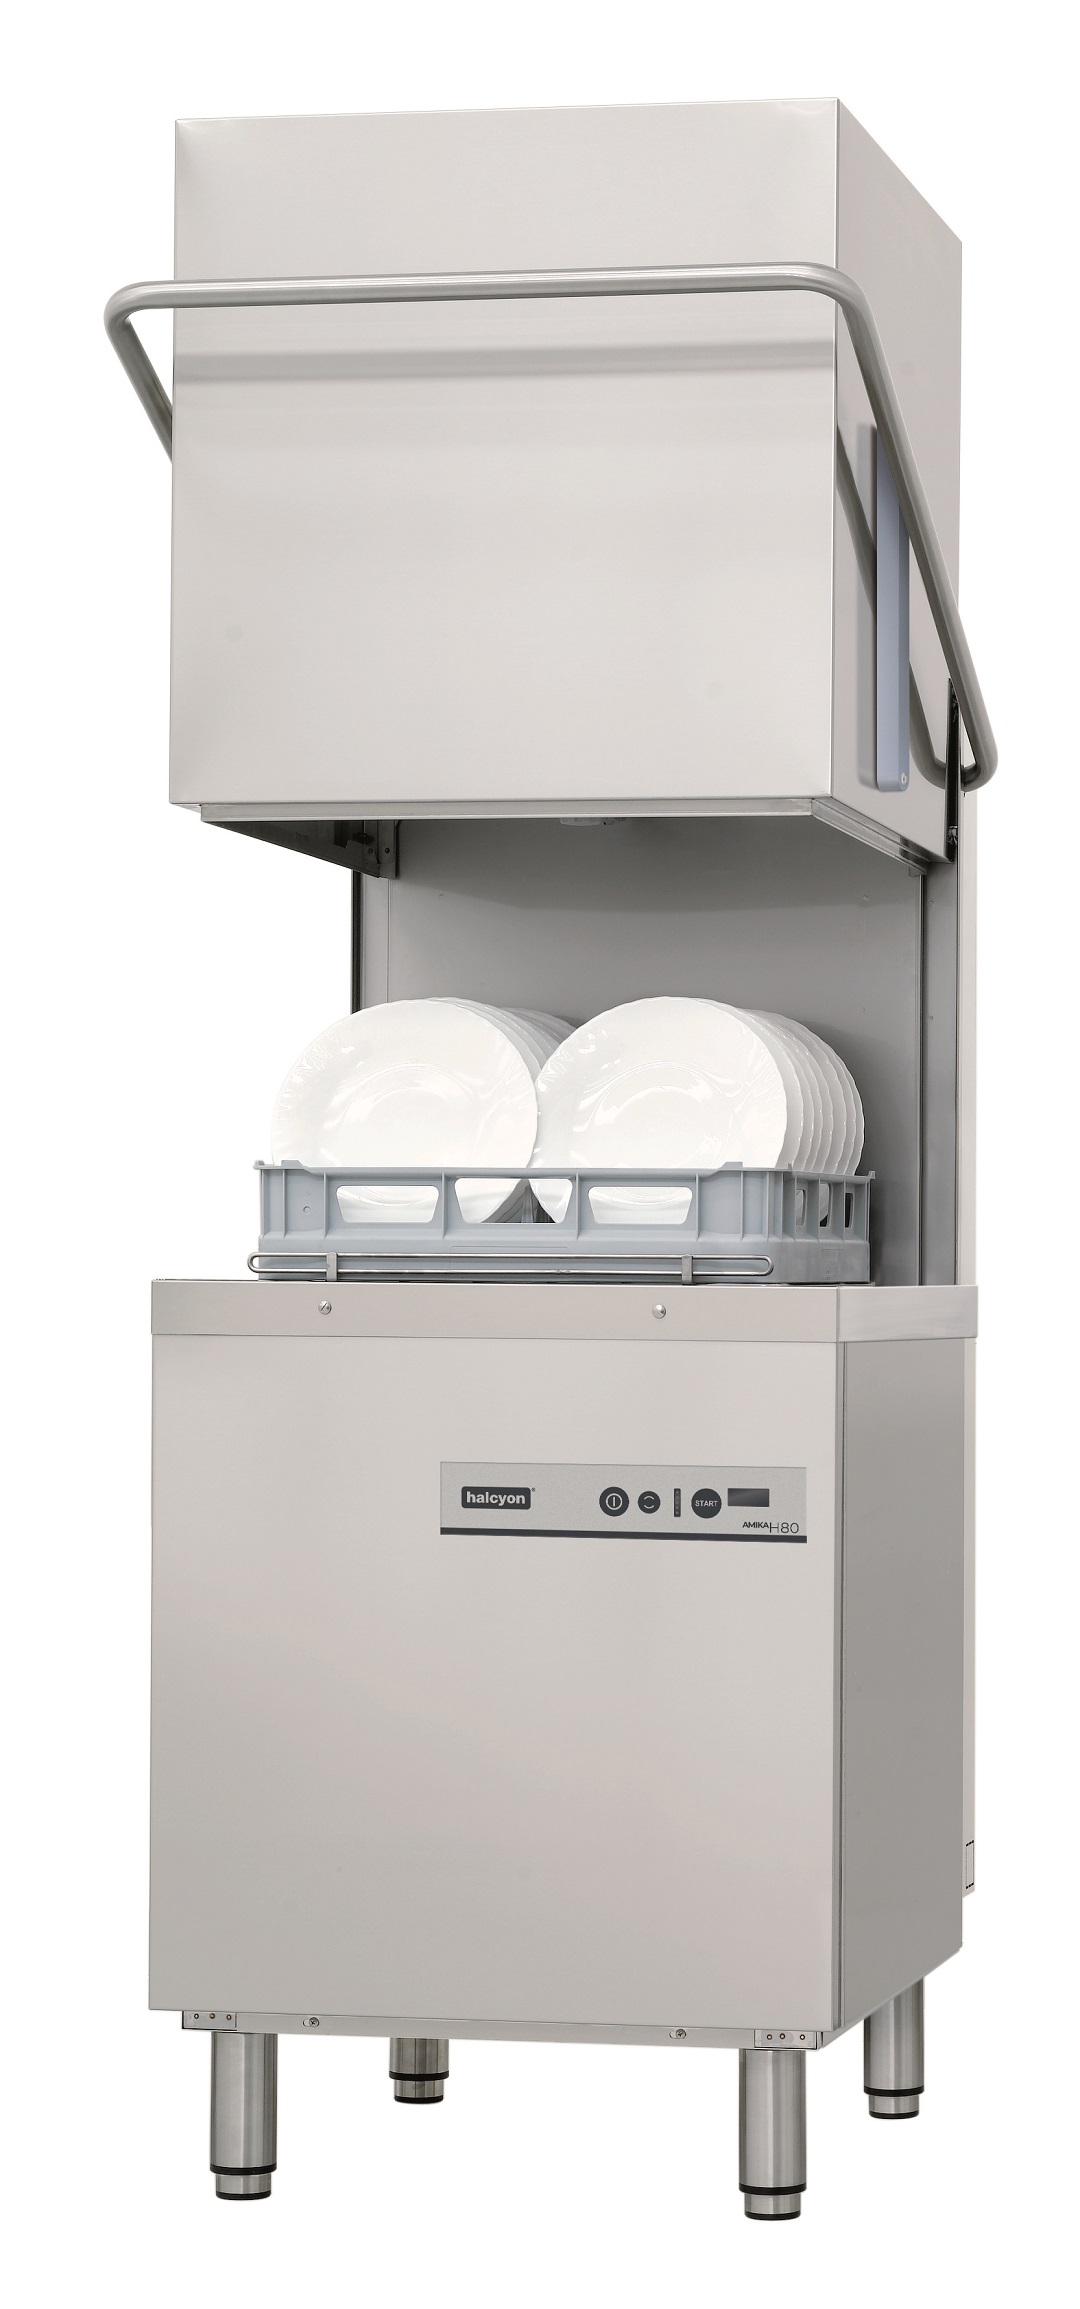 Halcyon Amika AMH80 Pass-Through Dishwasher